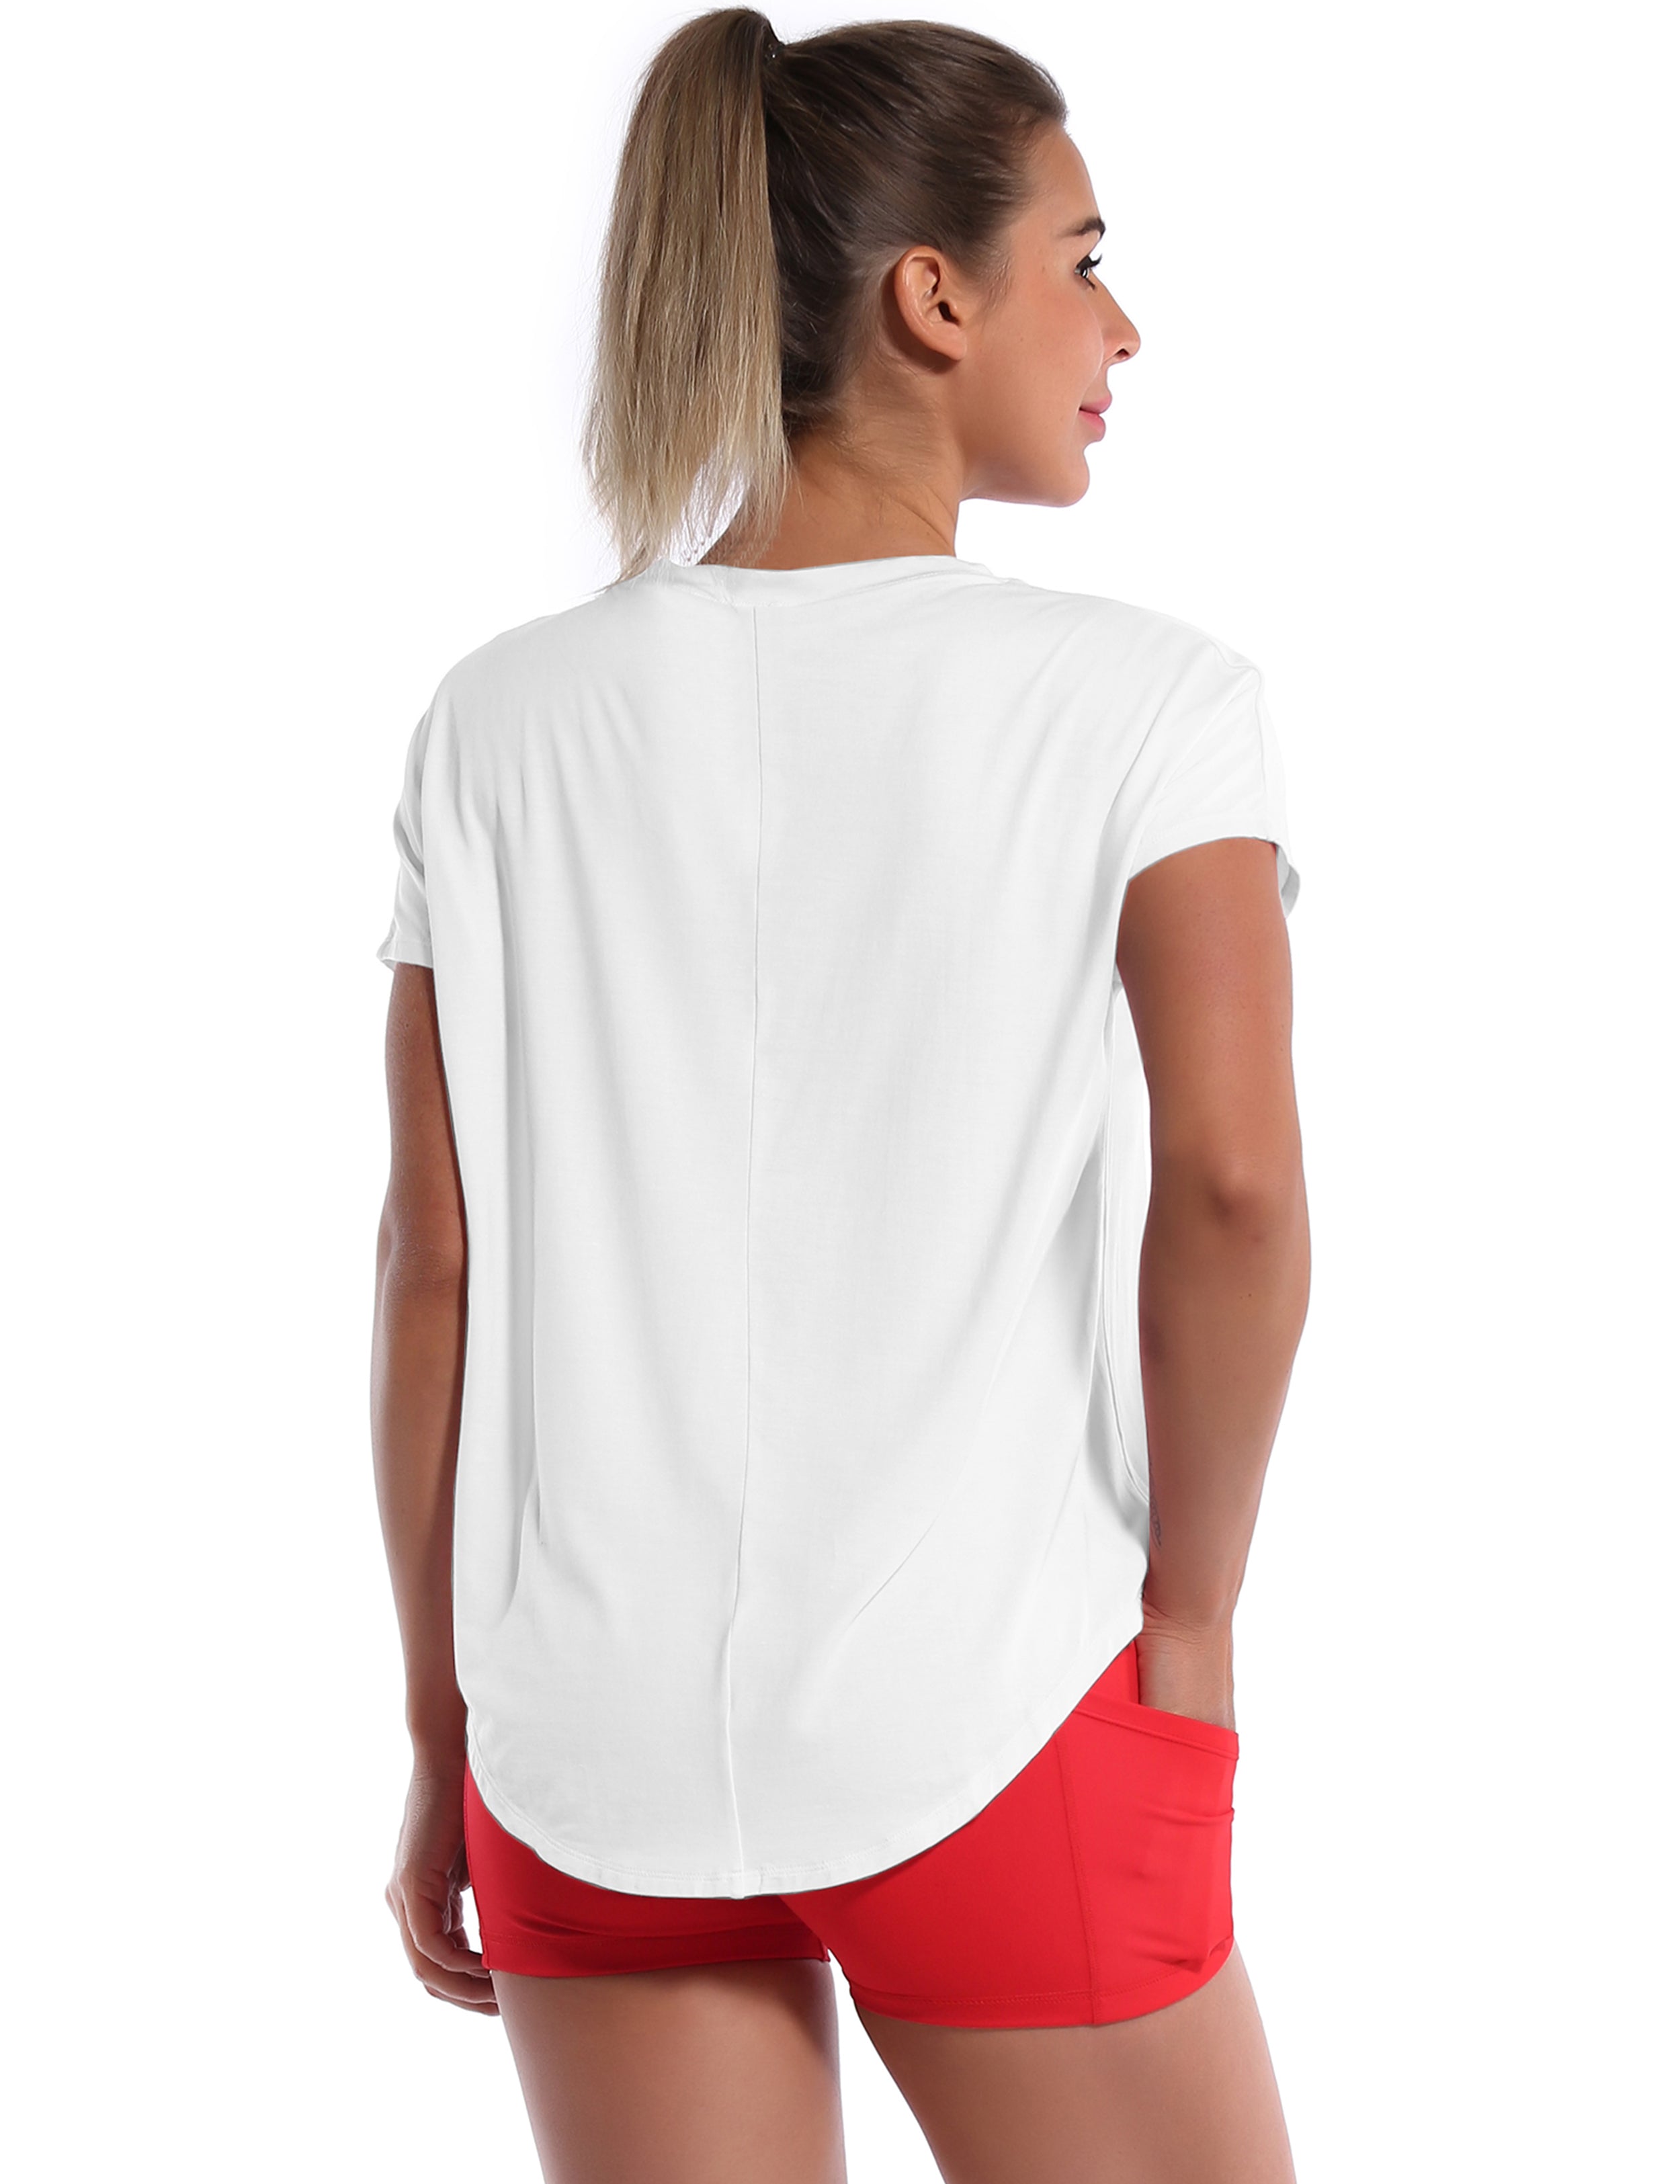 Hip Length Short Sleeve Shirt white_Plus Size